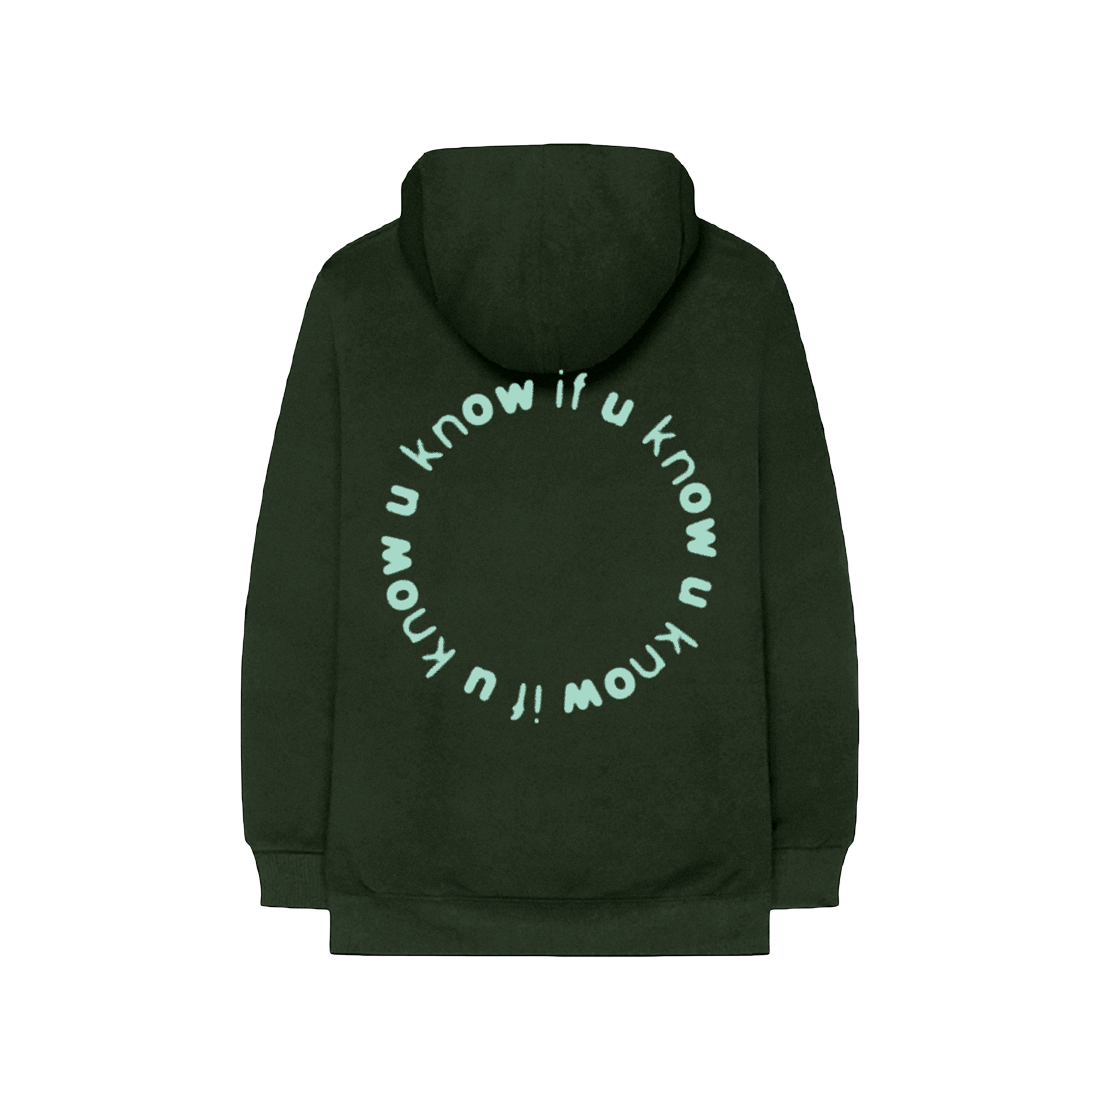 Underworld - if u know u know dark green hoodie